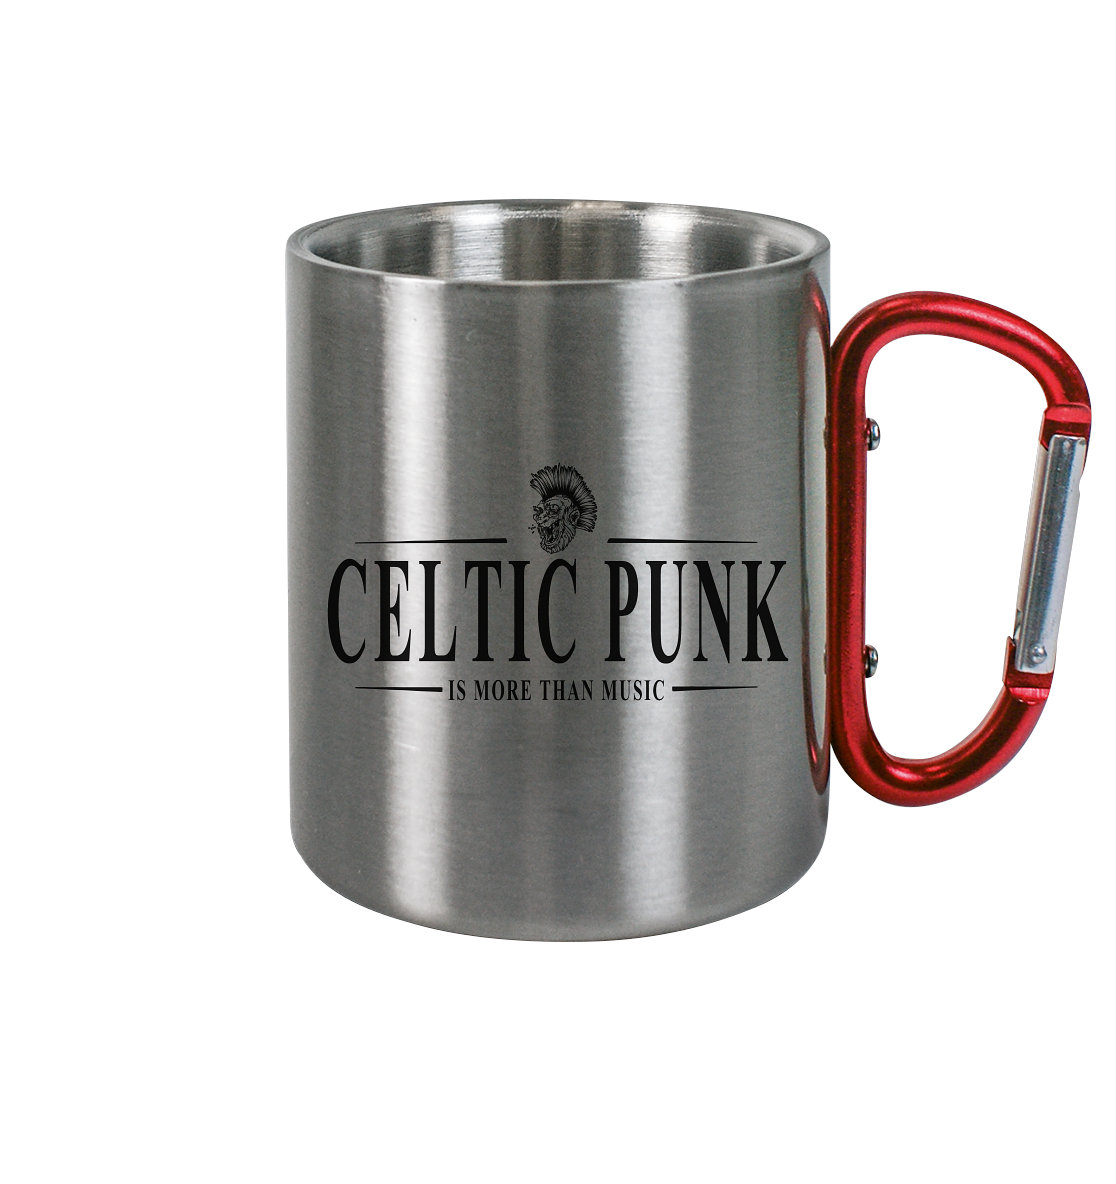 Celtic Punk "Is More Than Music" - Edelstahl Tasse